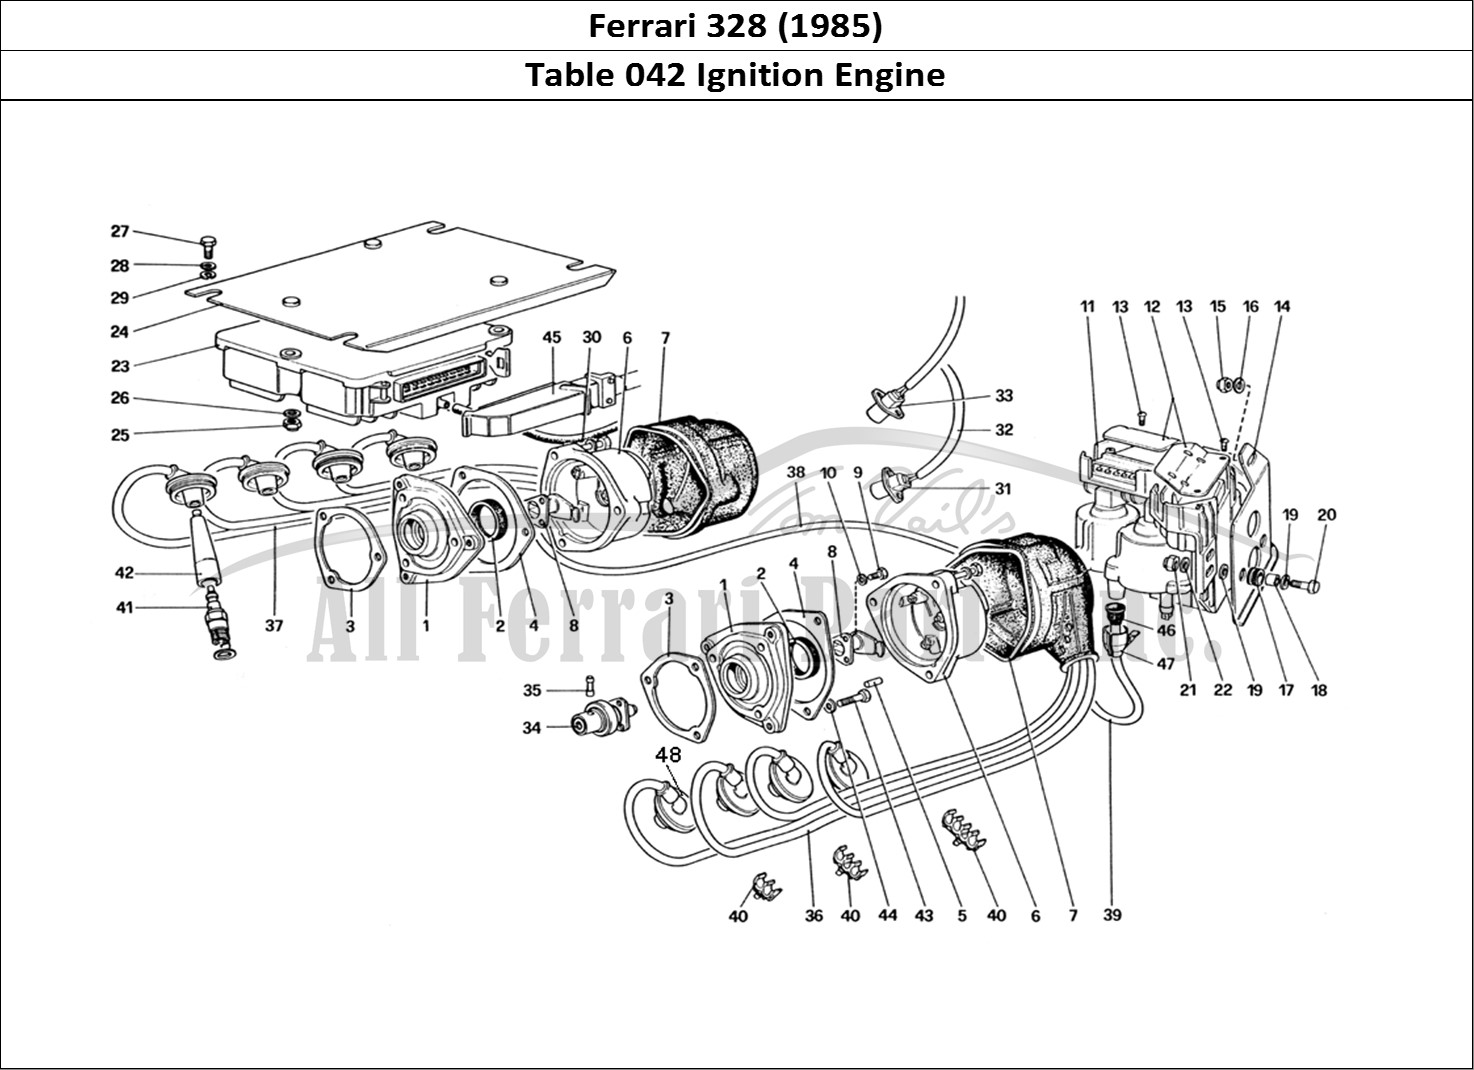 Ferrari Parts Ferrari 328 (1985) Page 042 Engine Ignition